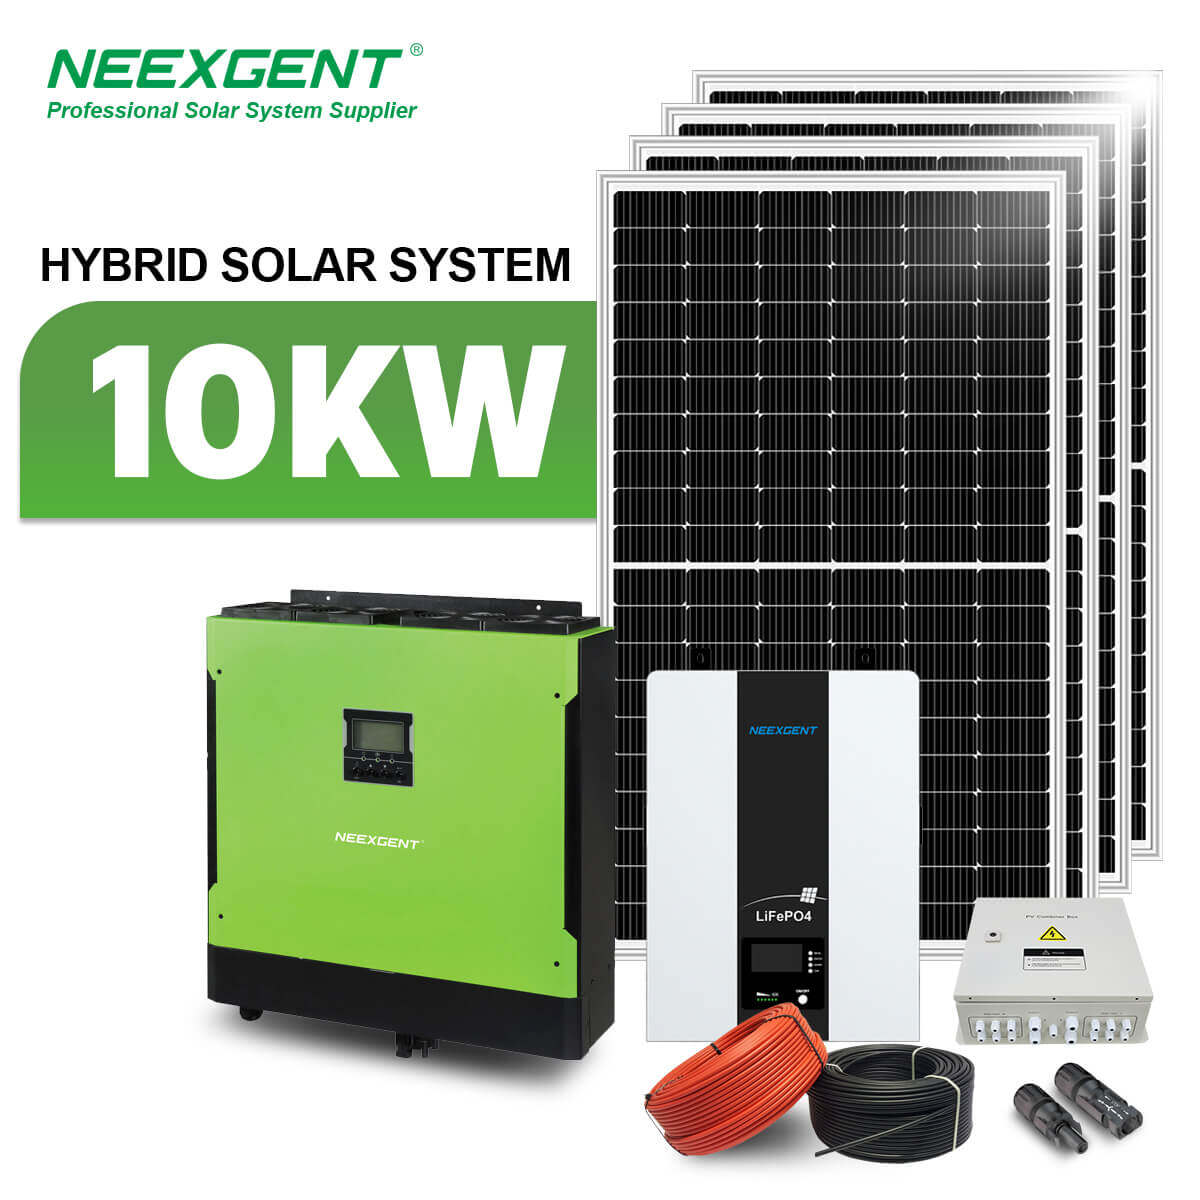 Neexgent Hot Sales Complete Set Hybrid Solar System Solar Energy System 10kw Solar Power System Home